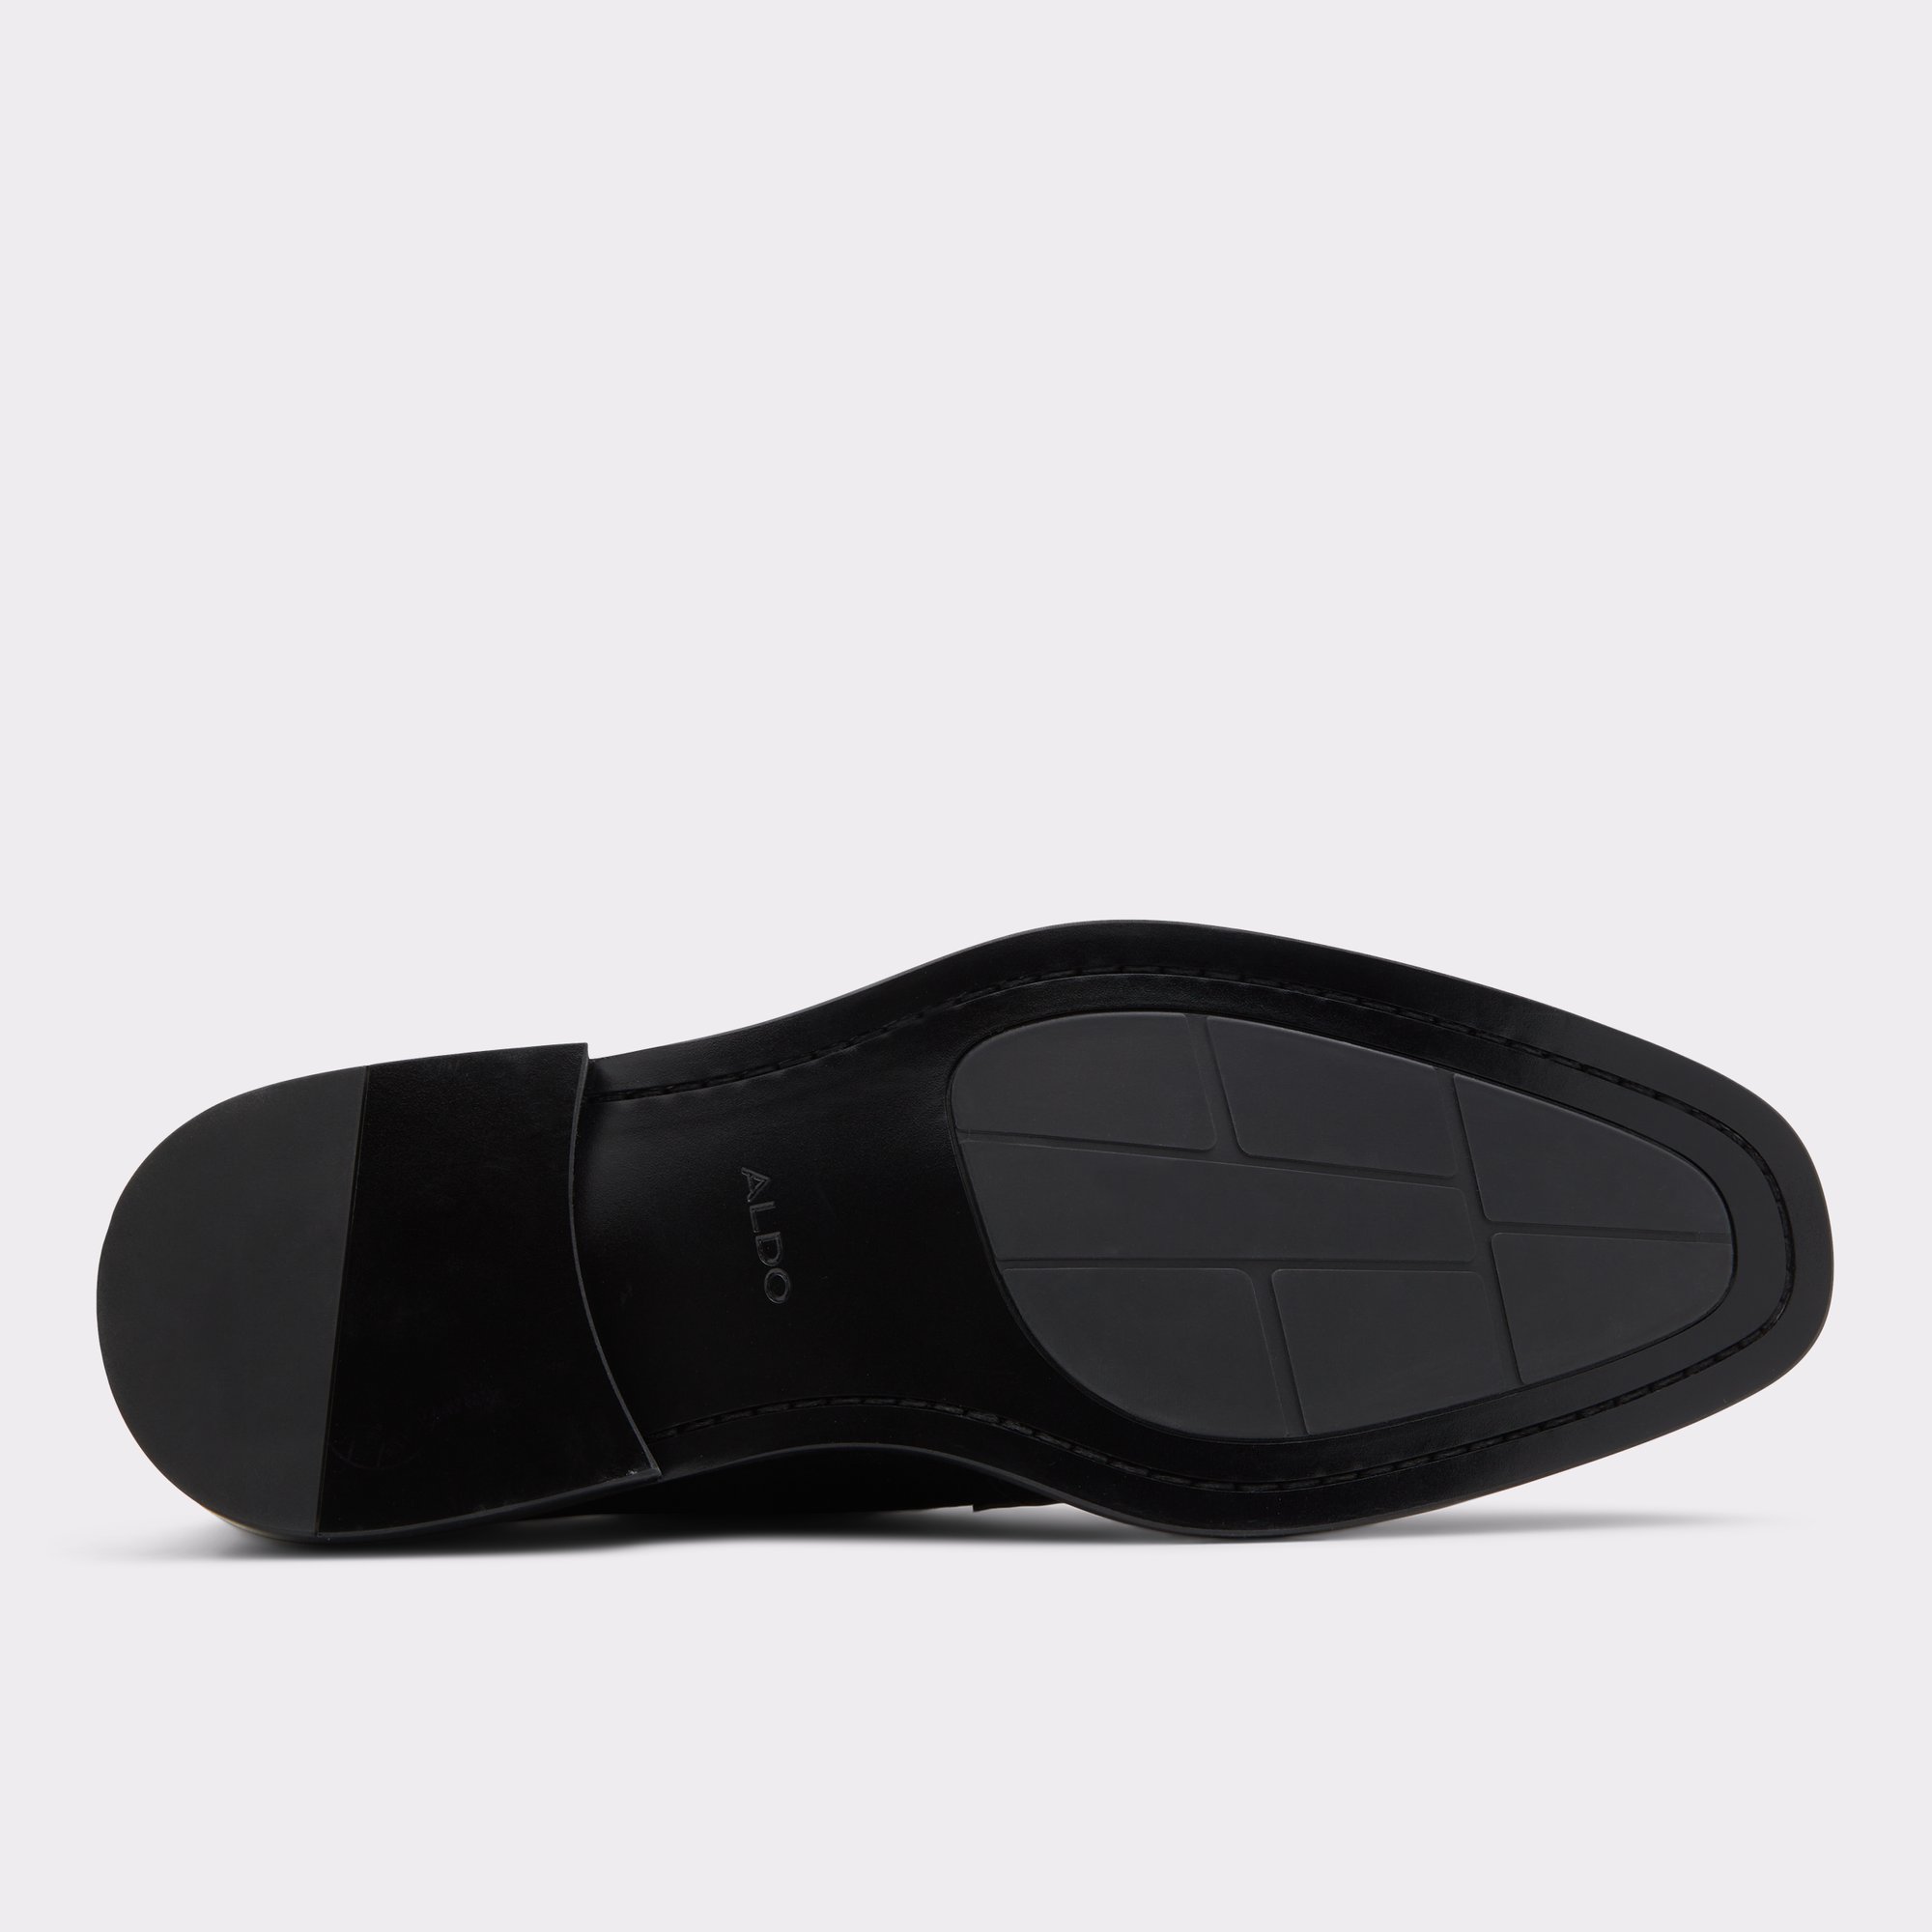 Boyard Black Leather Shiny Men's Dress Shoes | ALDO Canada